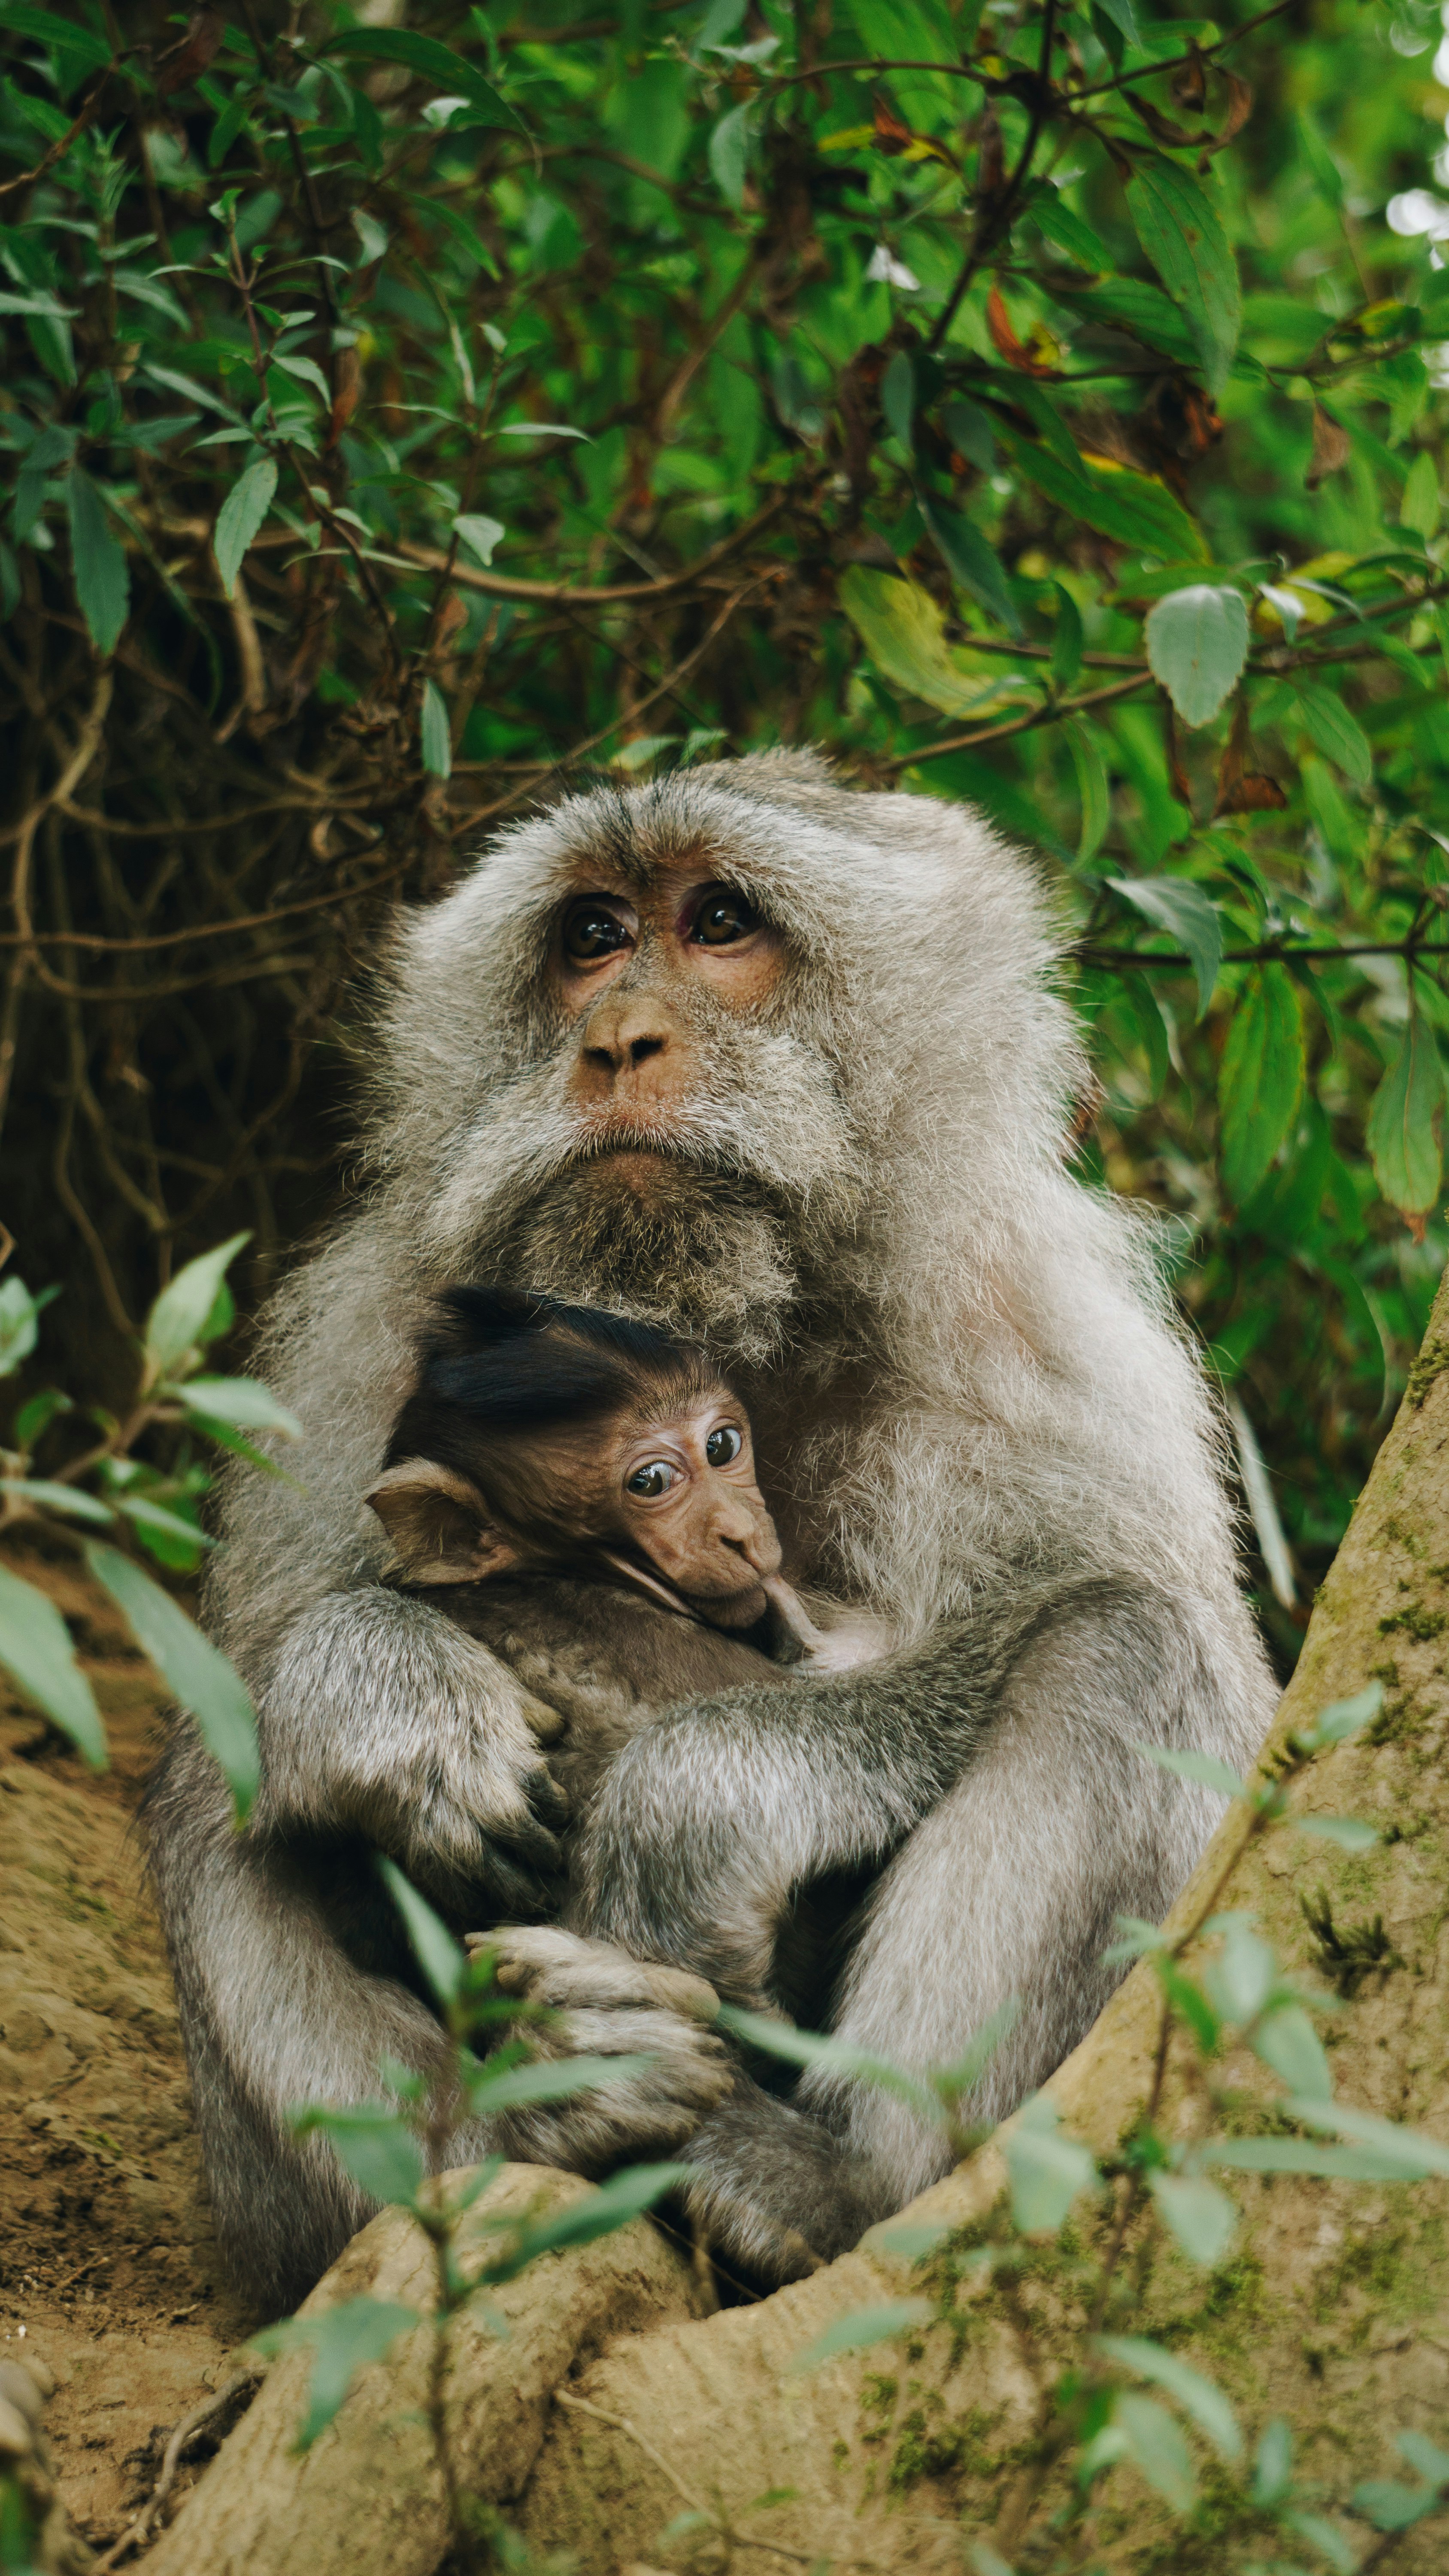 gray monkey carrying baby monkey at daytime